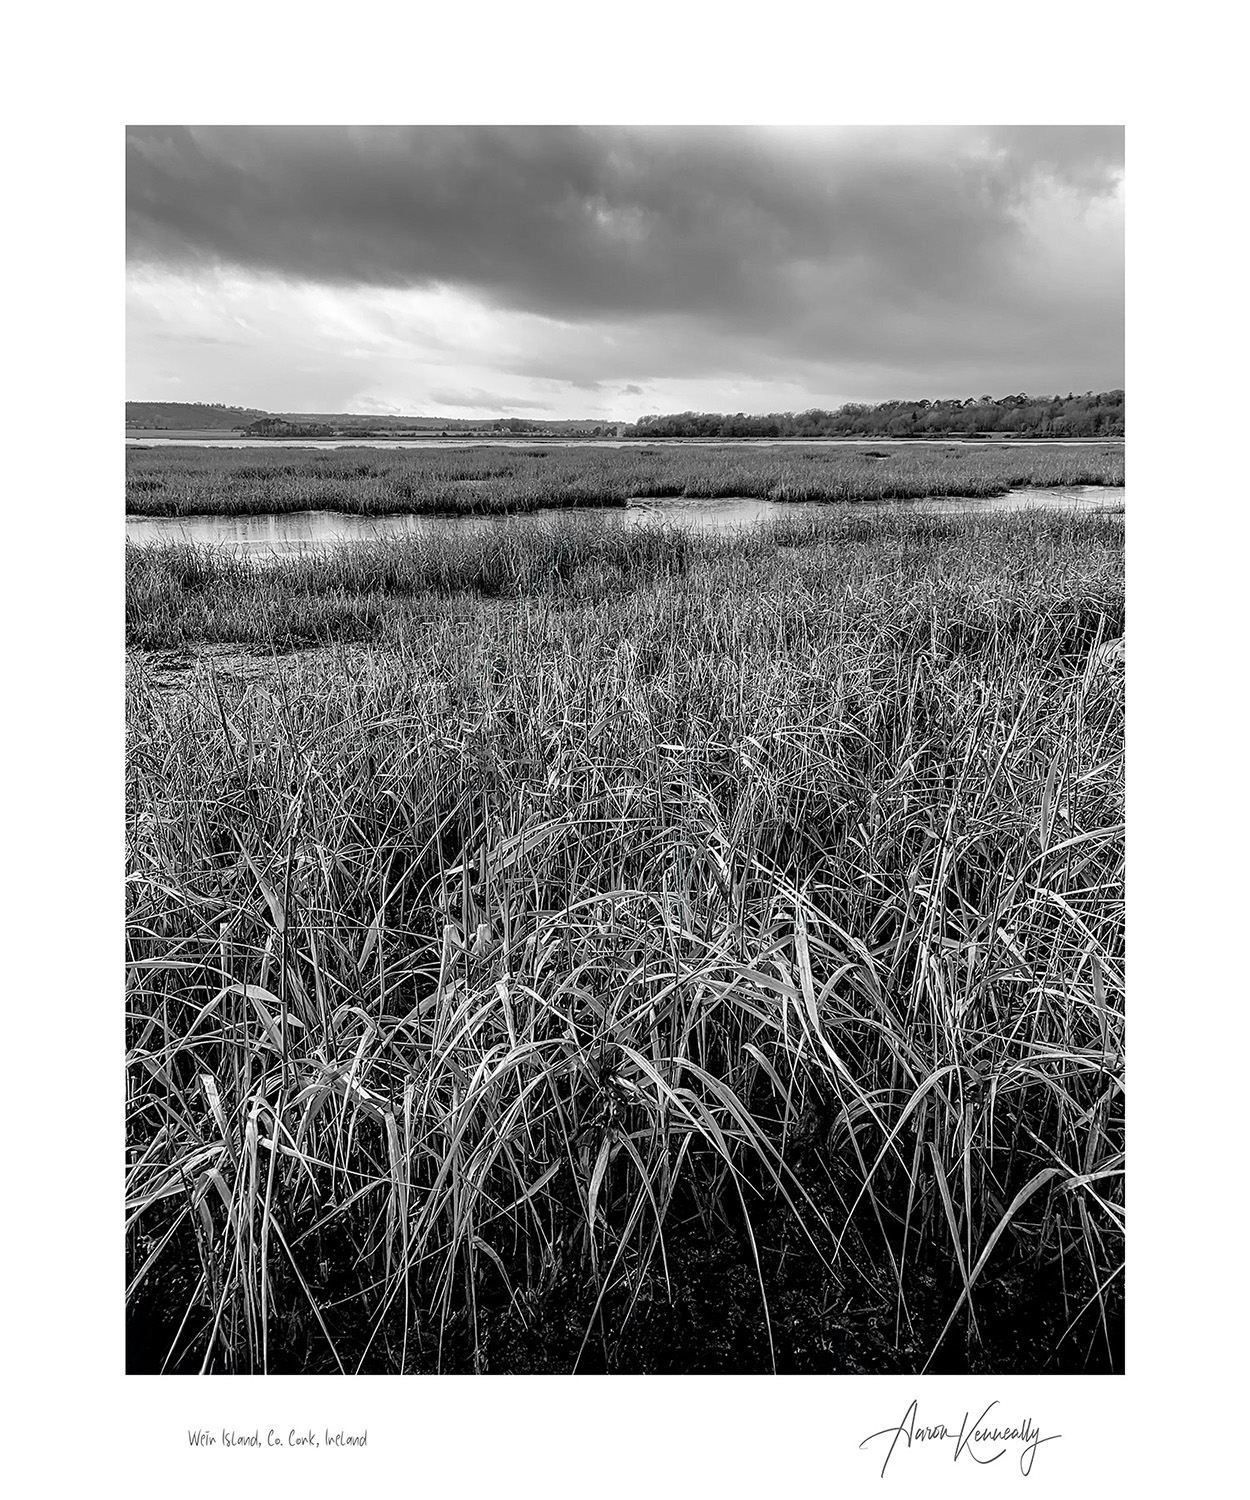 The Weir Island Grasses, Co. Cork, Ireland